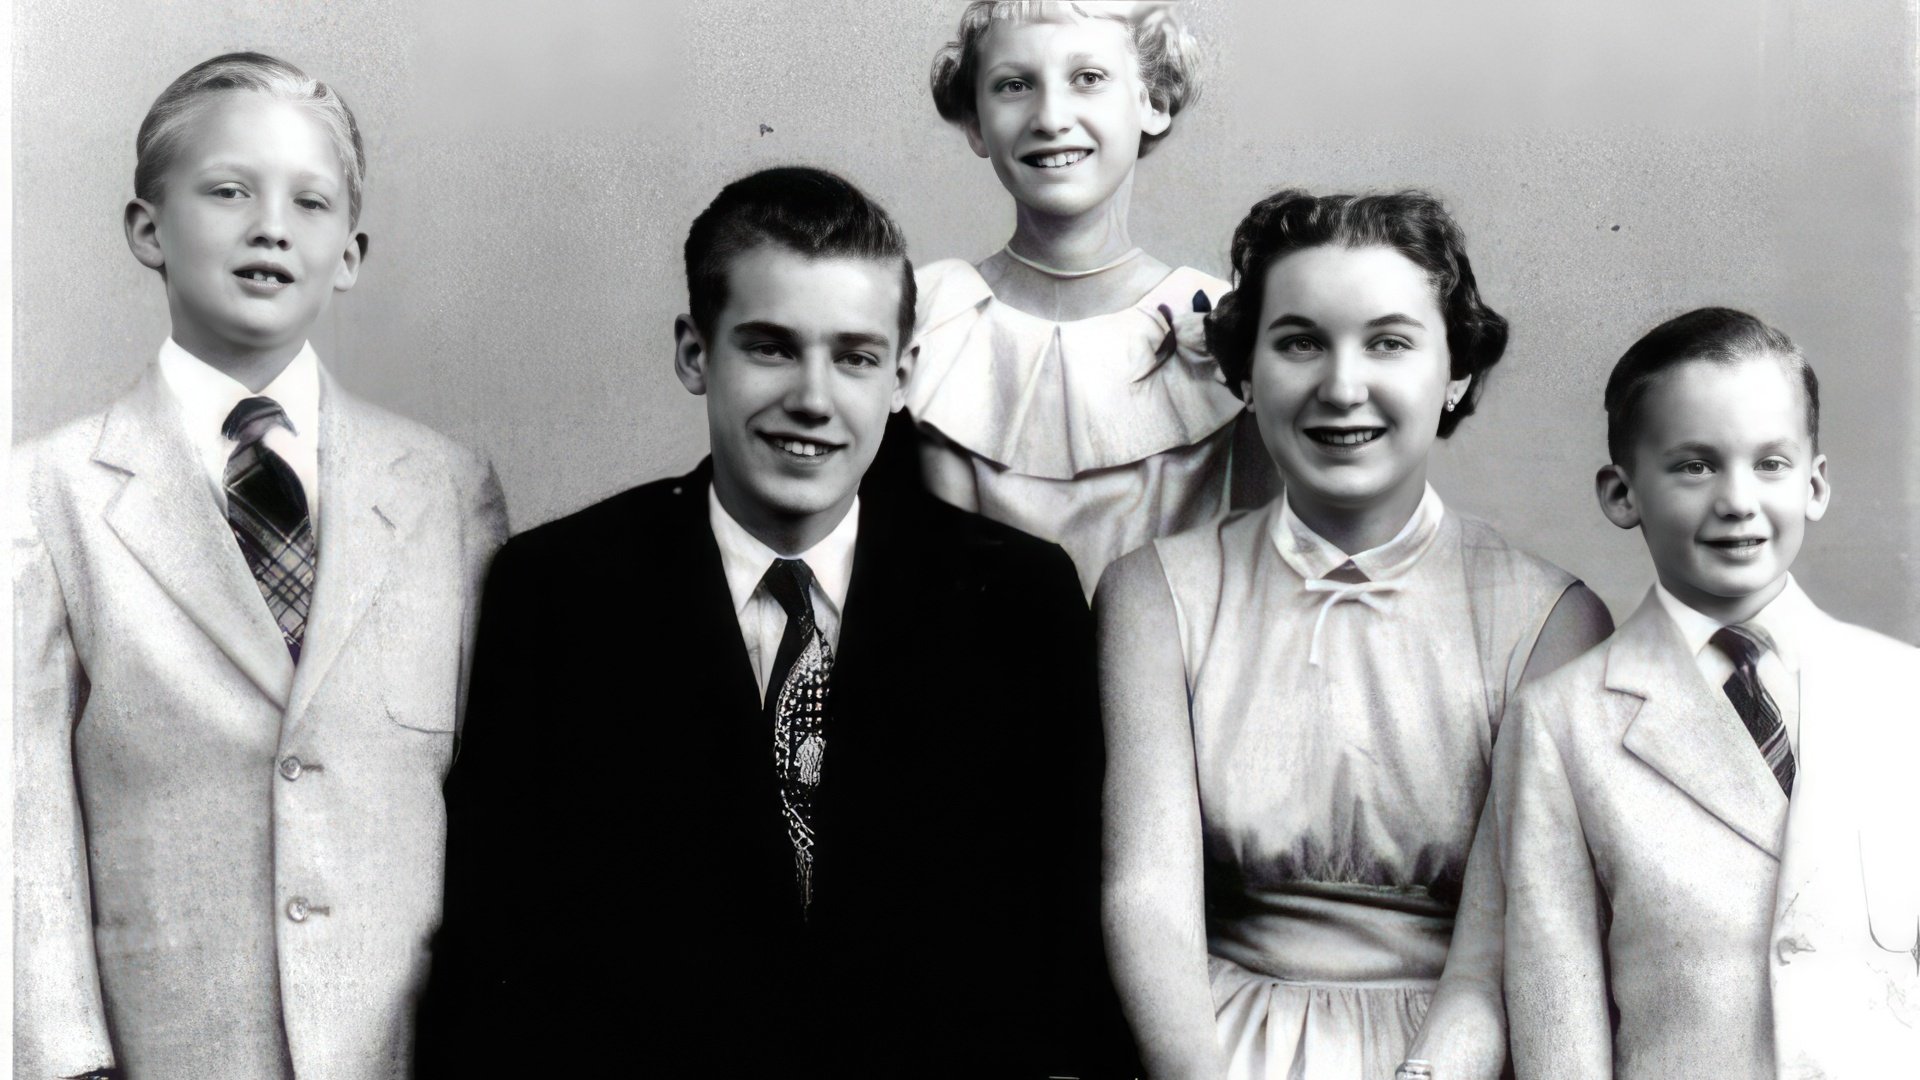 Donald Trump (far left) with his siblings